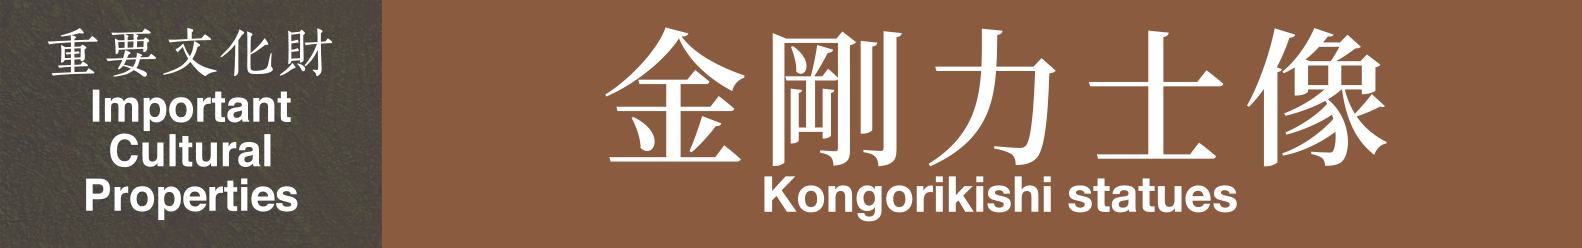 Kongorikishi statues: Important Cultural Properties